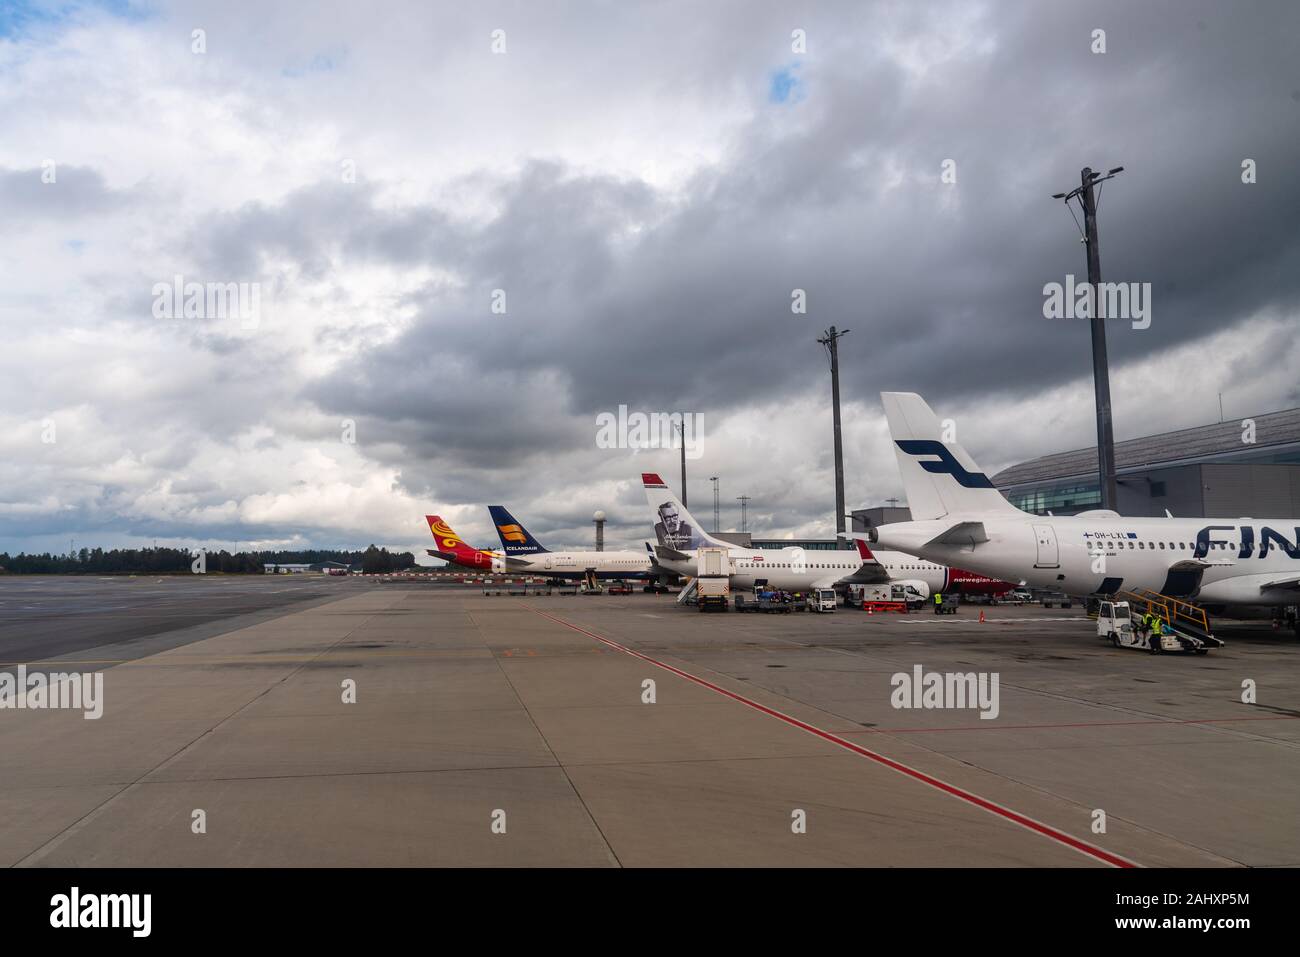 Oslo, Norway - August 12, 2019: Airplanes in runway of Oslo Gardermoen International Airport. Stock Photo